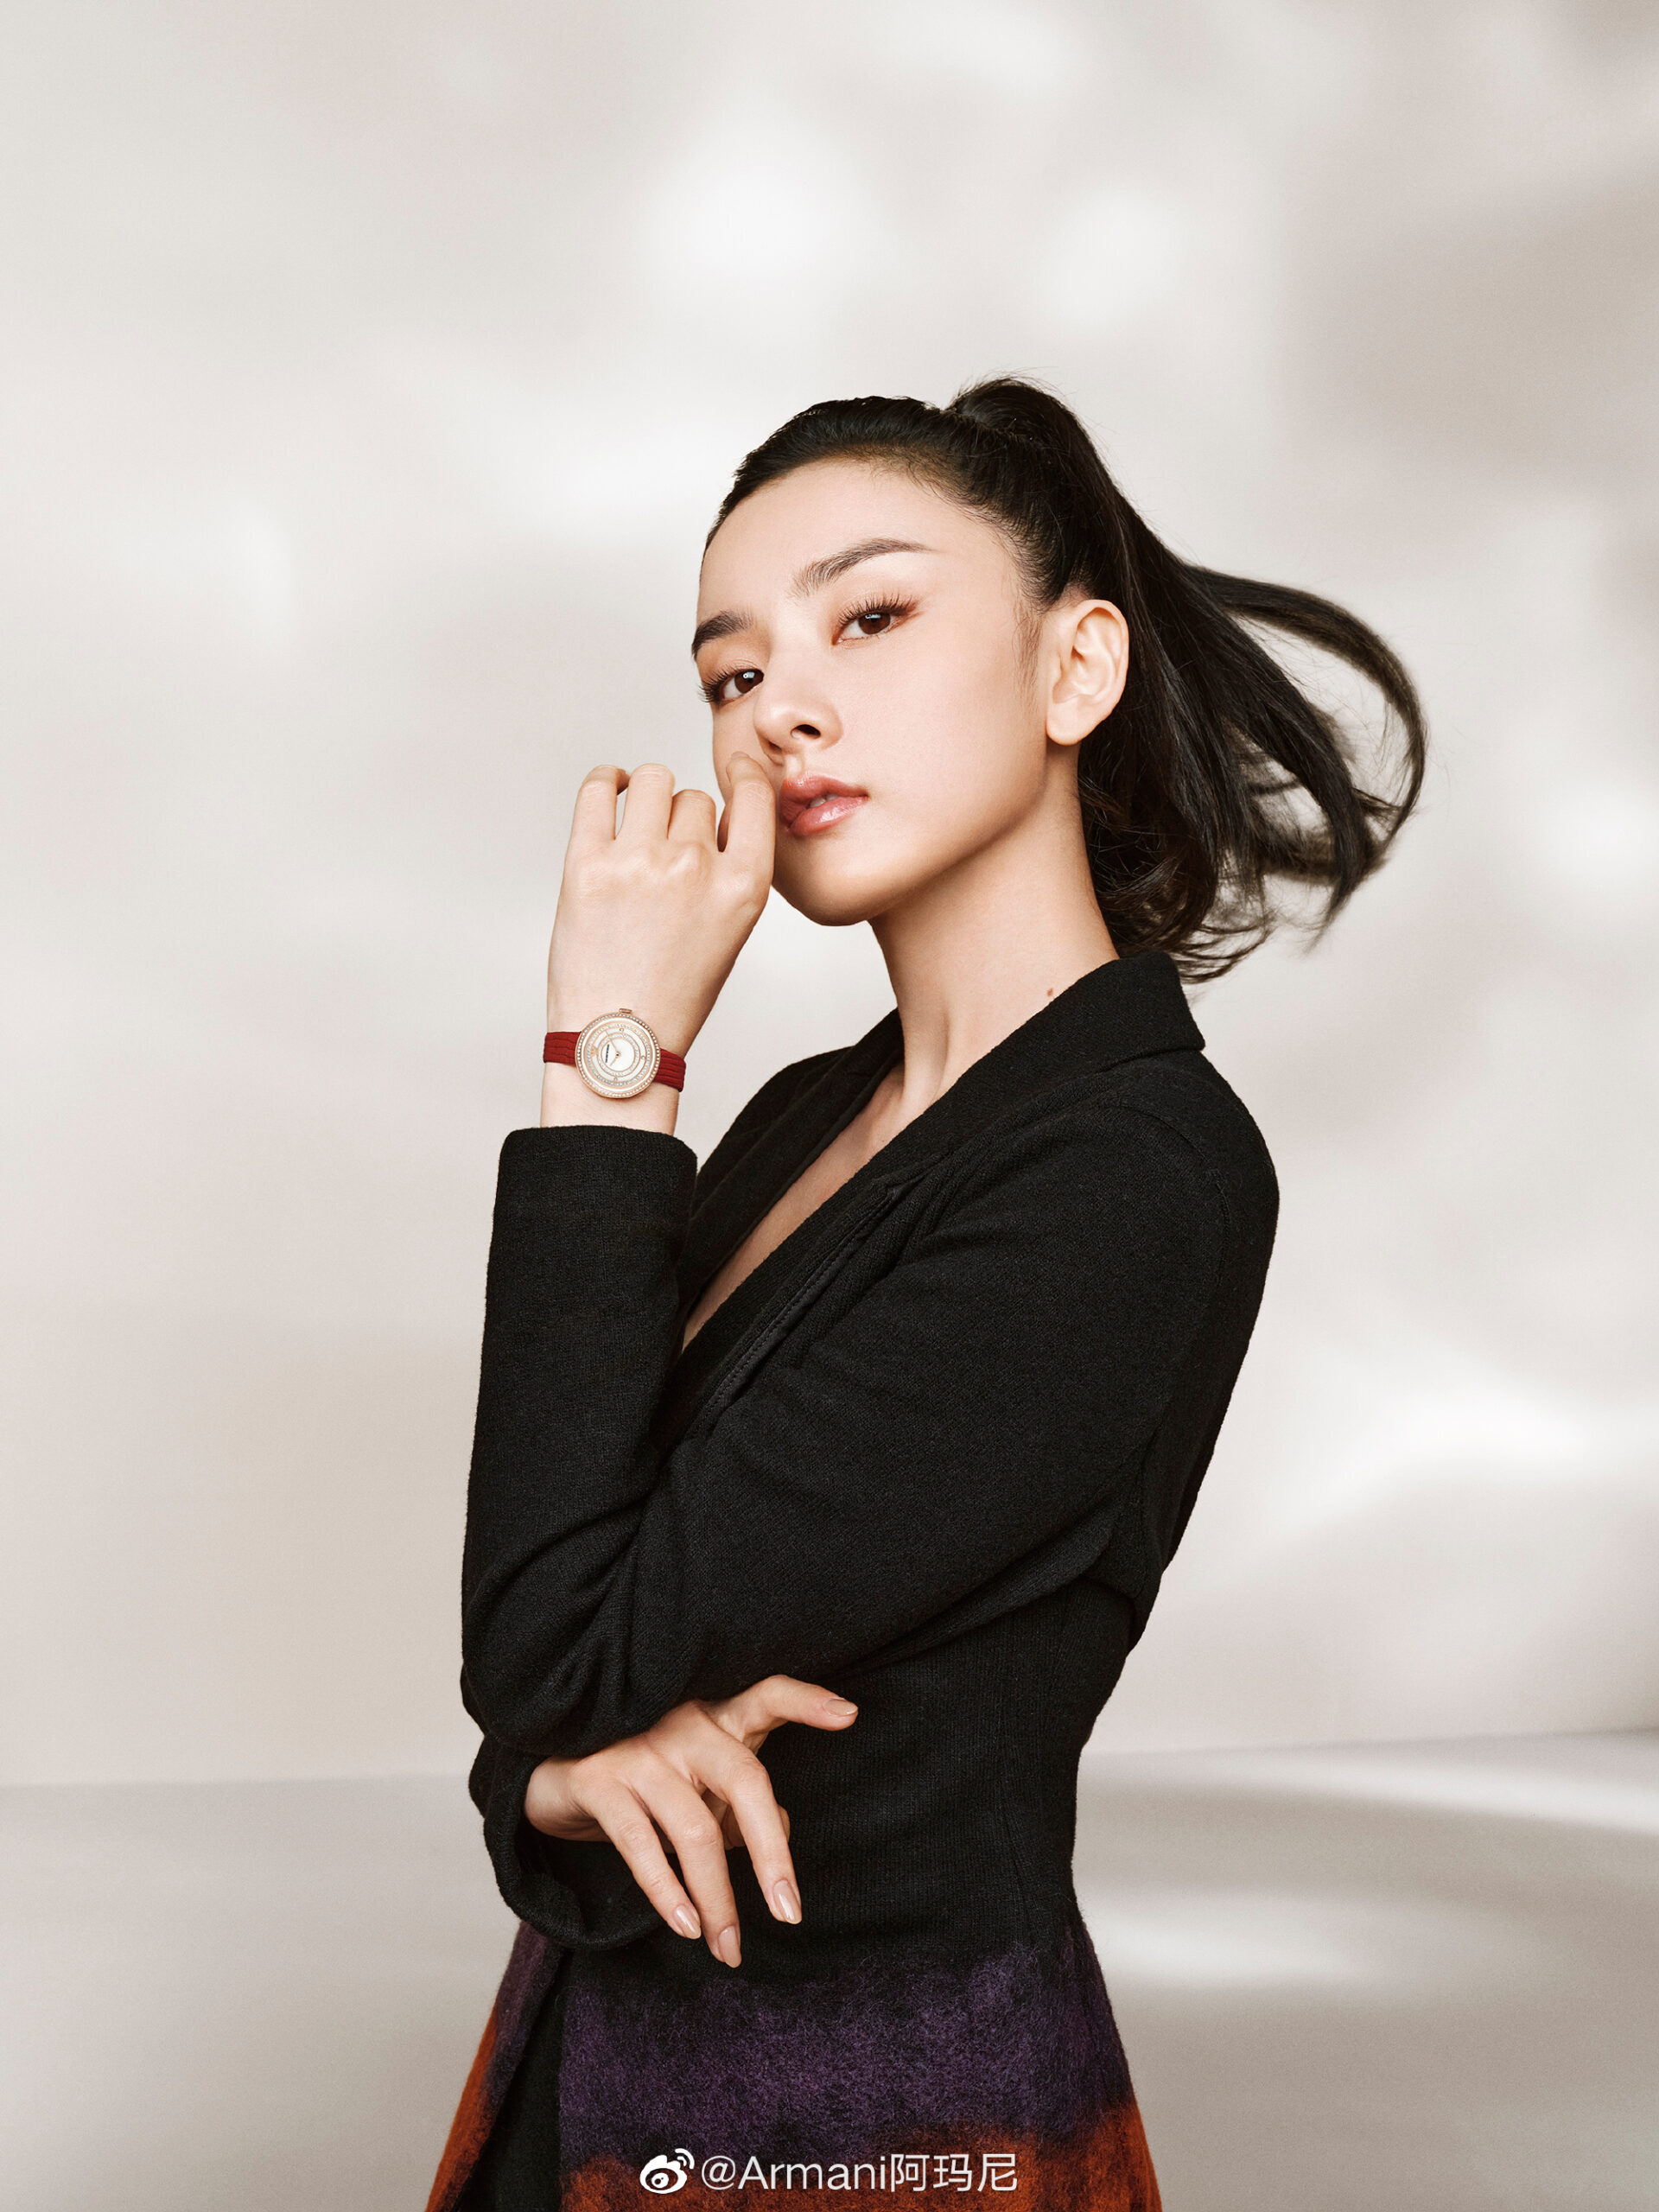 Armani阿玛尼宣布中国演员宋祖儿正式出任Emporio Armani大中华区及亚太区女士腕表及配饰形象代言人。 - 华丽通